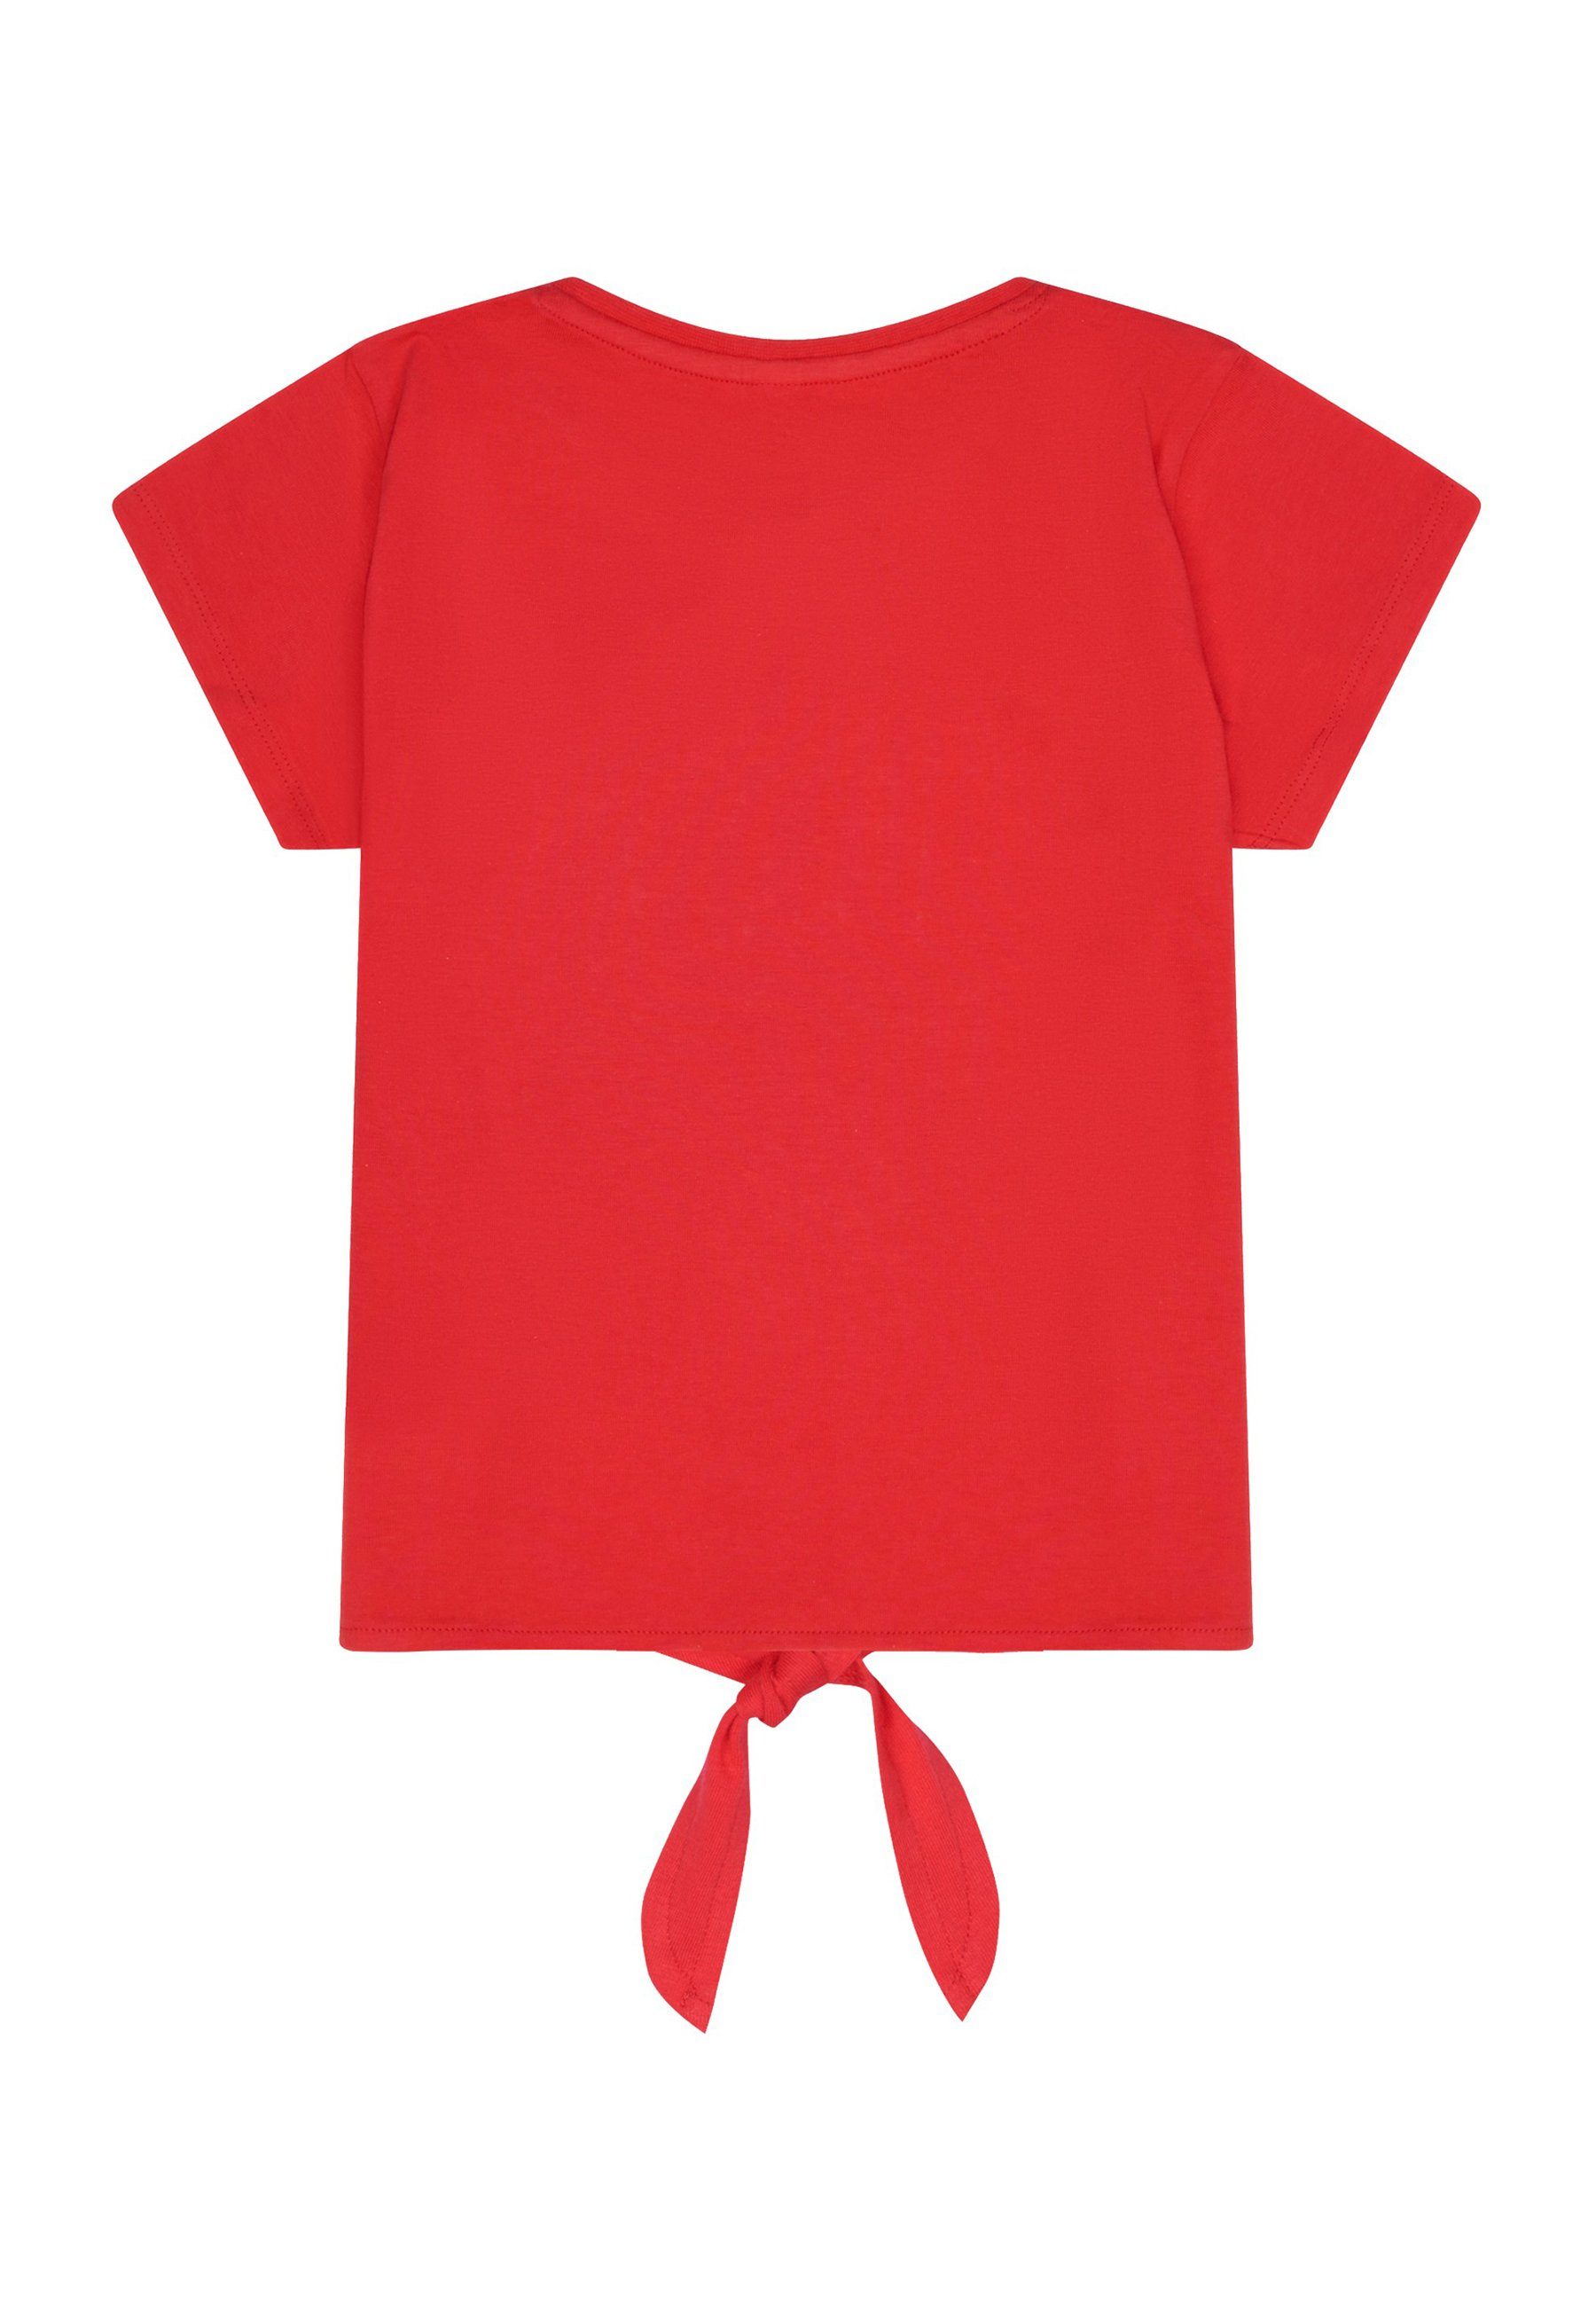 Miraculous Miraculous Mädchen Ladybug T-Shirt T-Shirt Oberteil Kinder - kurzarm Ladybug